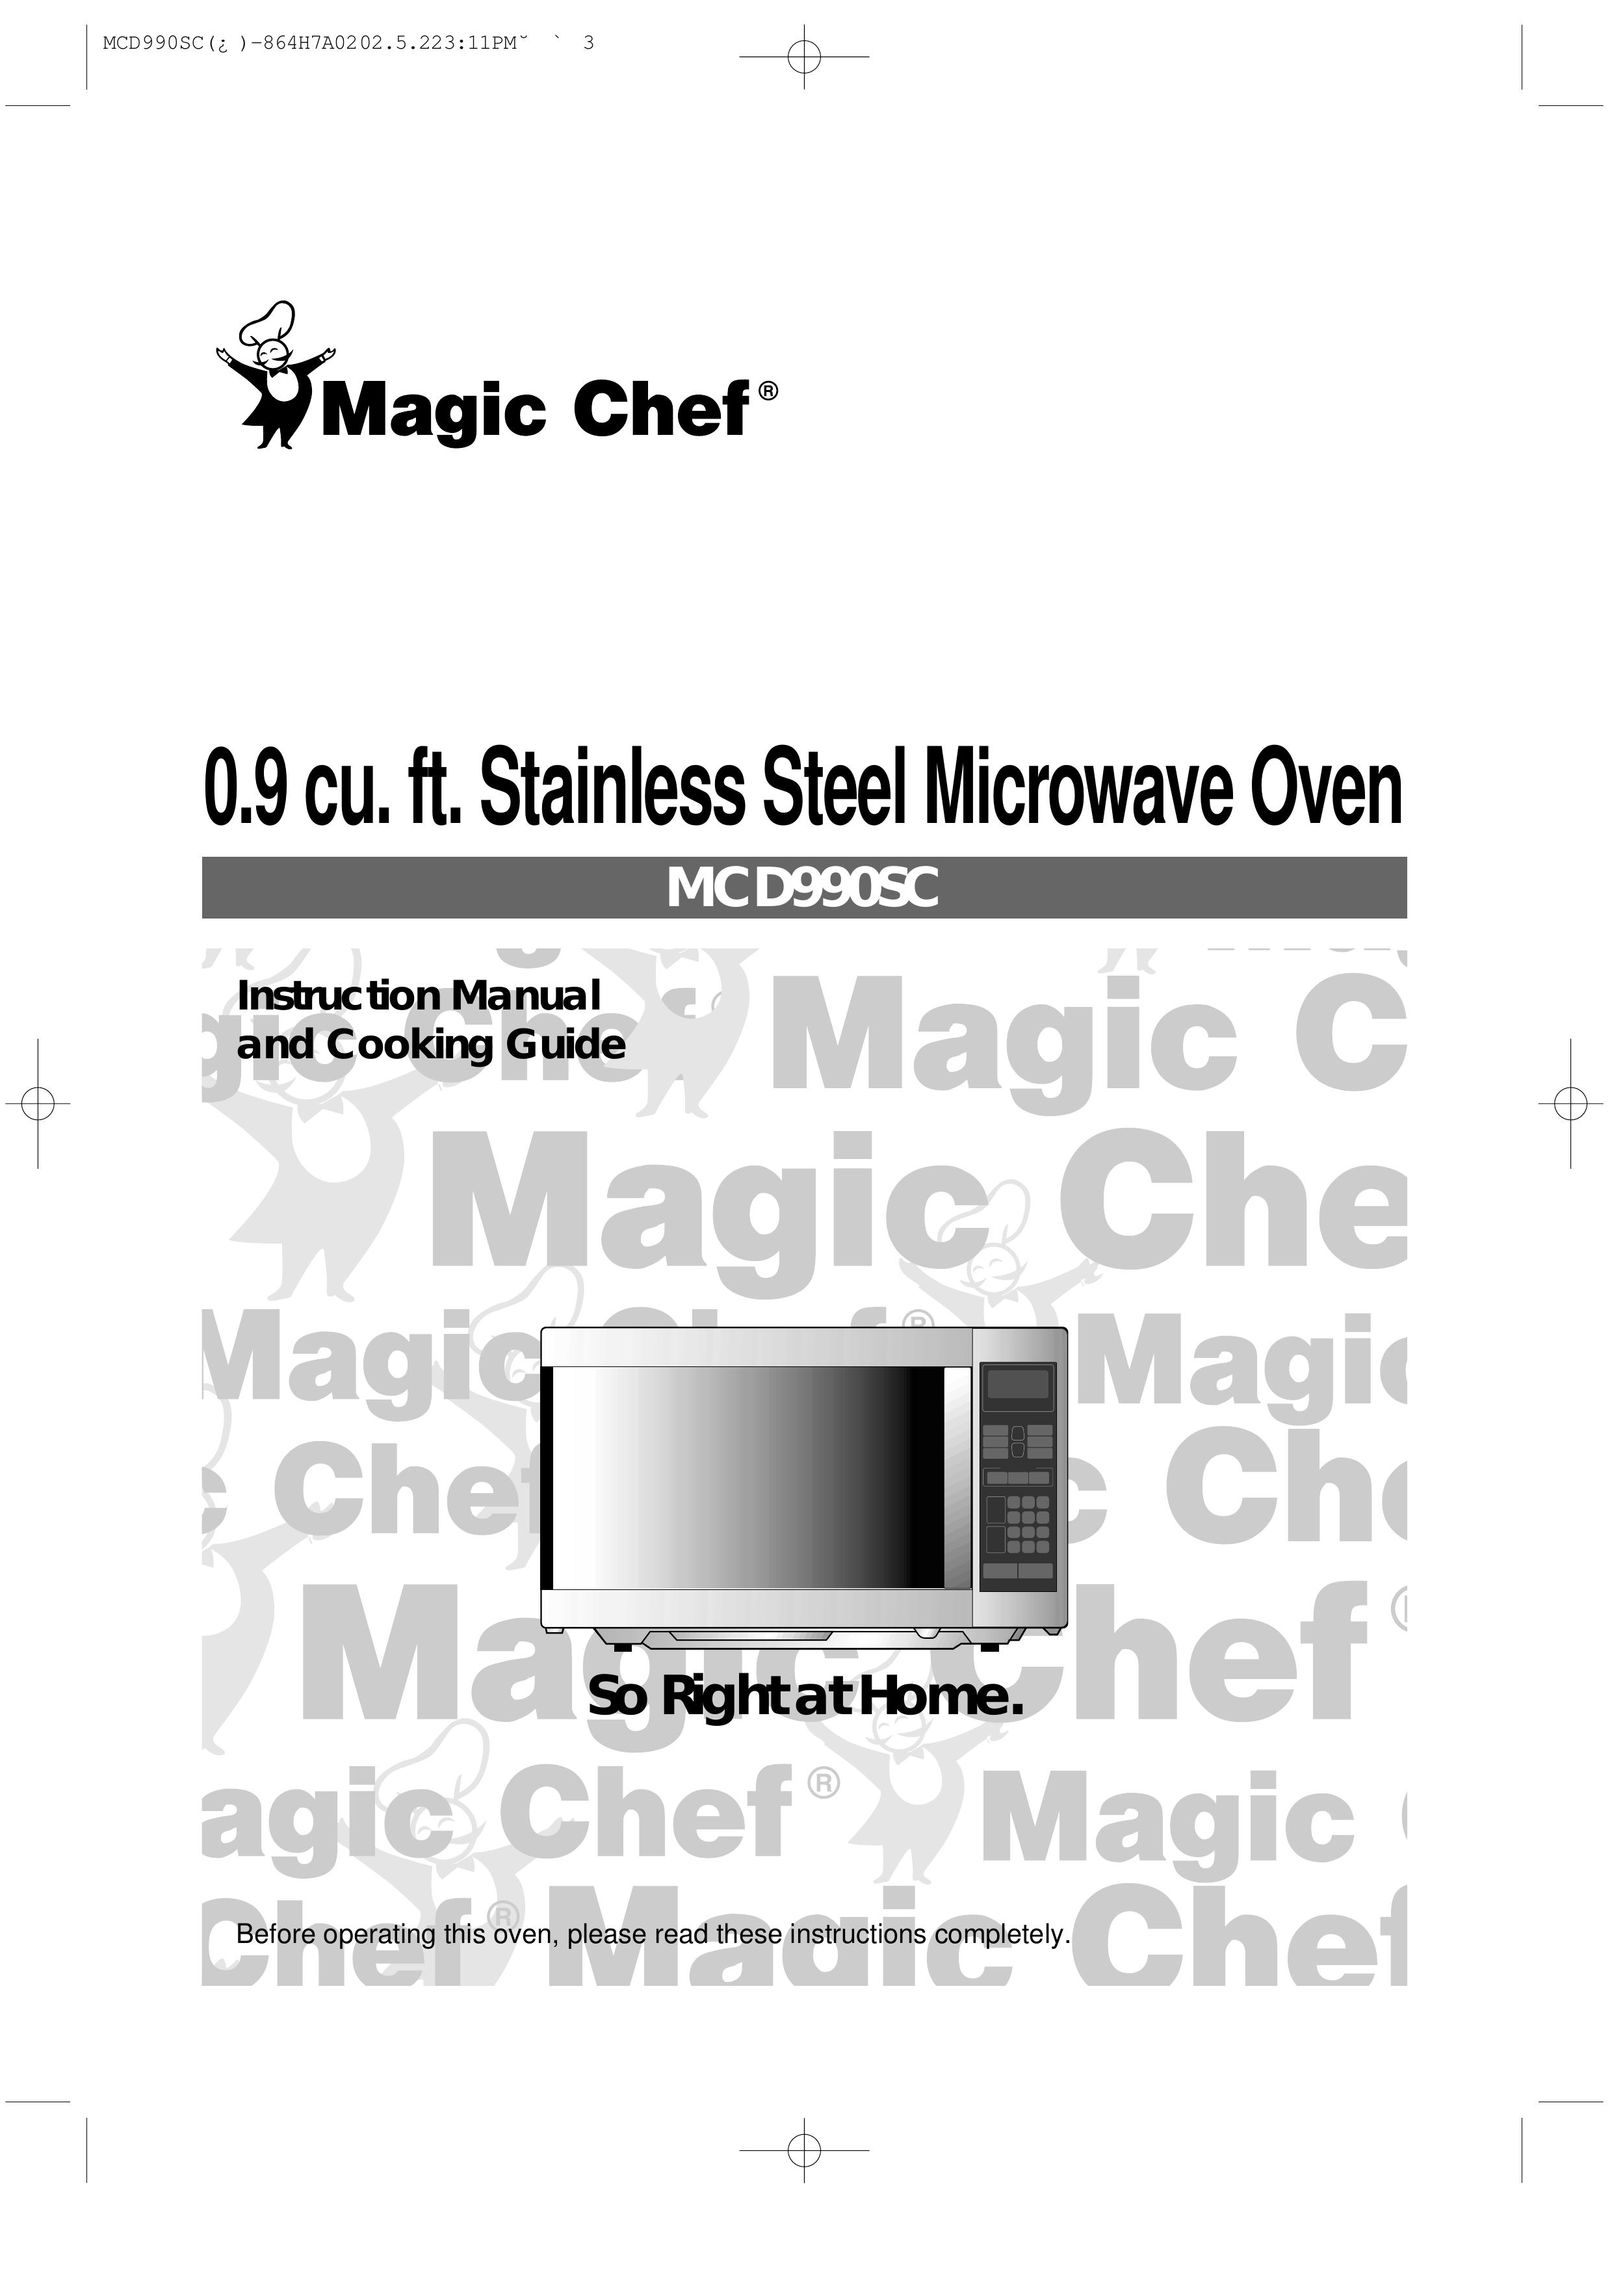 Magic Chef MCD990SC Microwave Oven User Manual